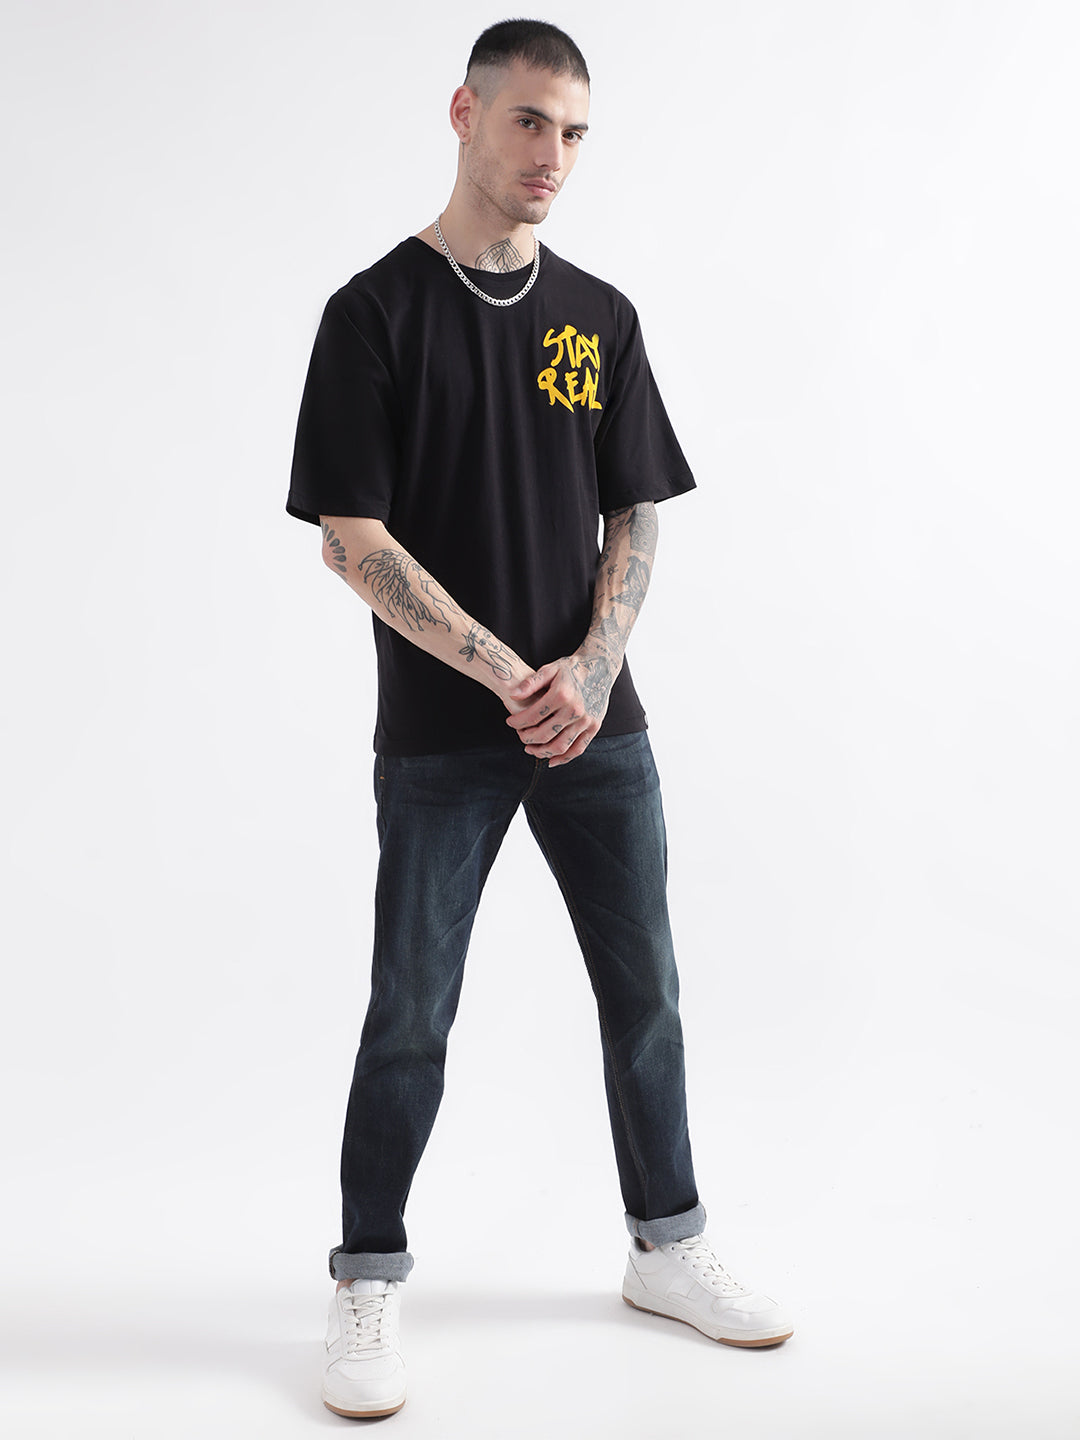 Punk STAY-REAL Black Oversized Tshirt